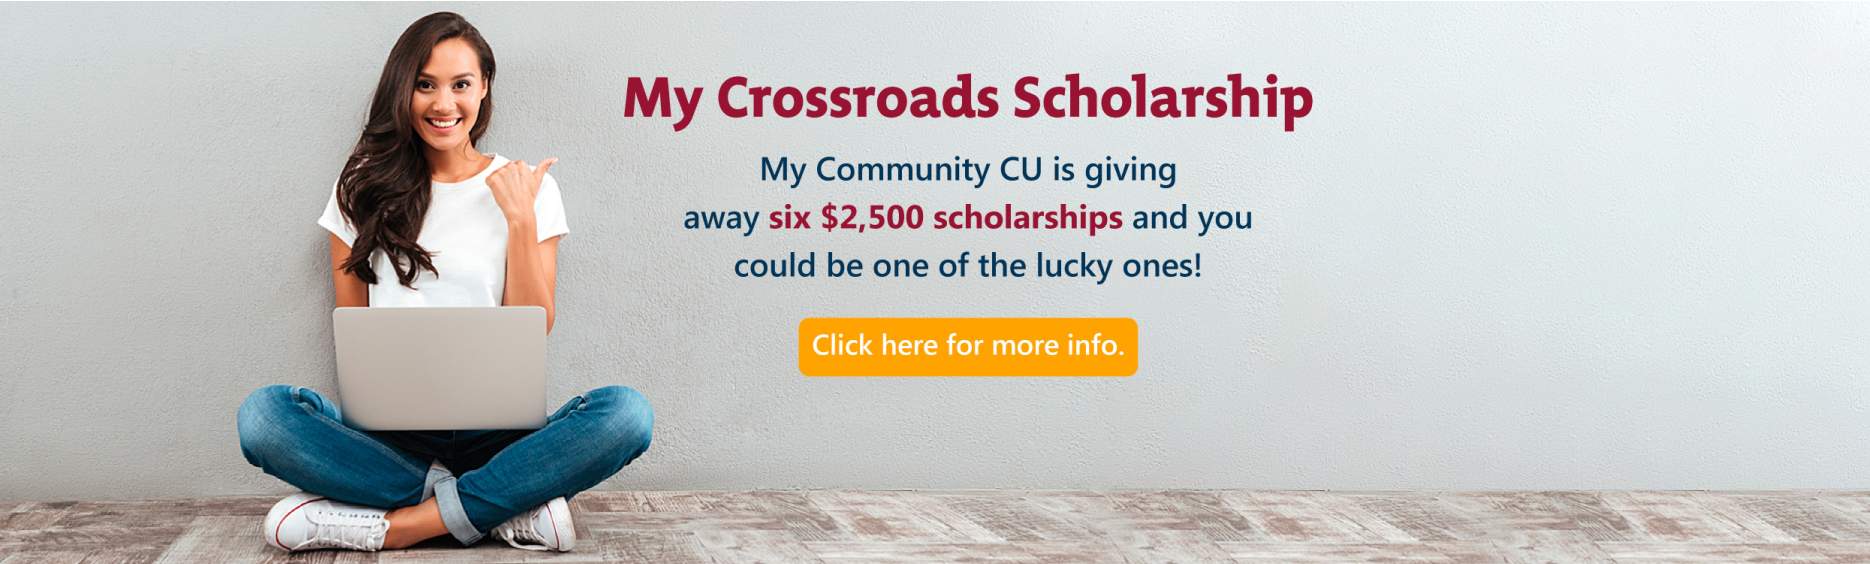 Crossroads Scholarship